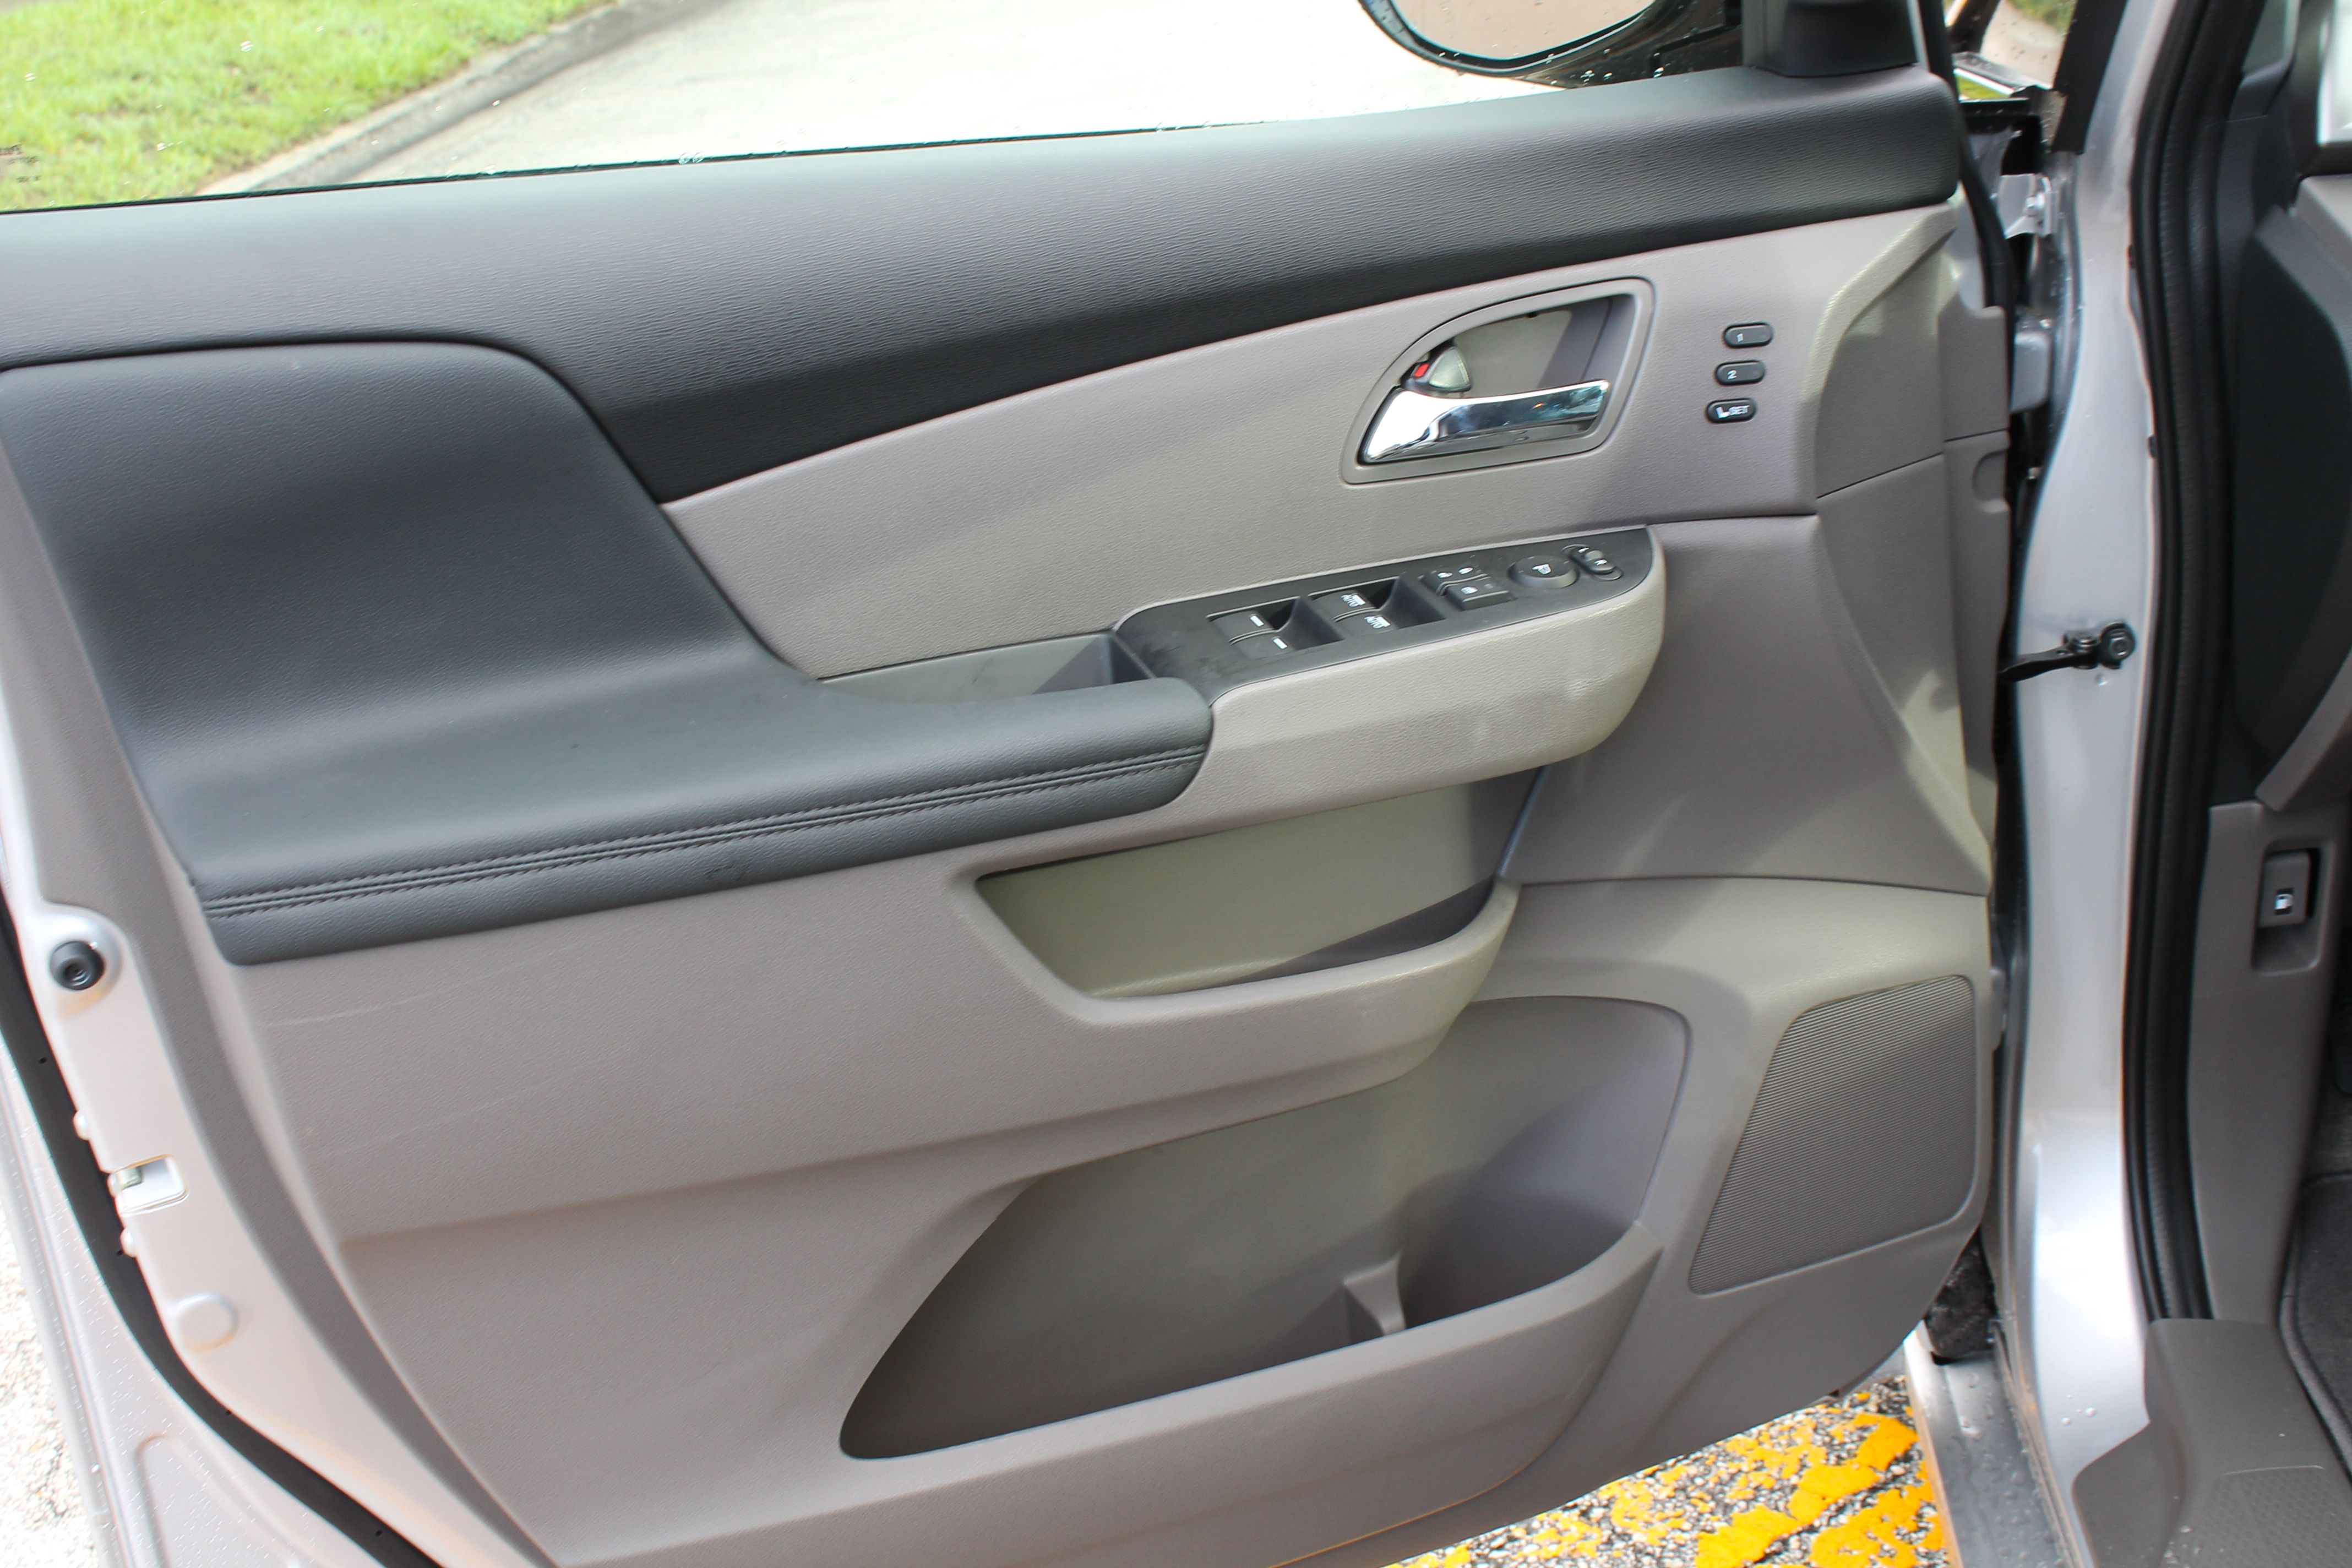 2015 Honda Odyssey Touring Elite - Driven